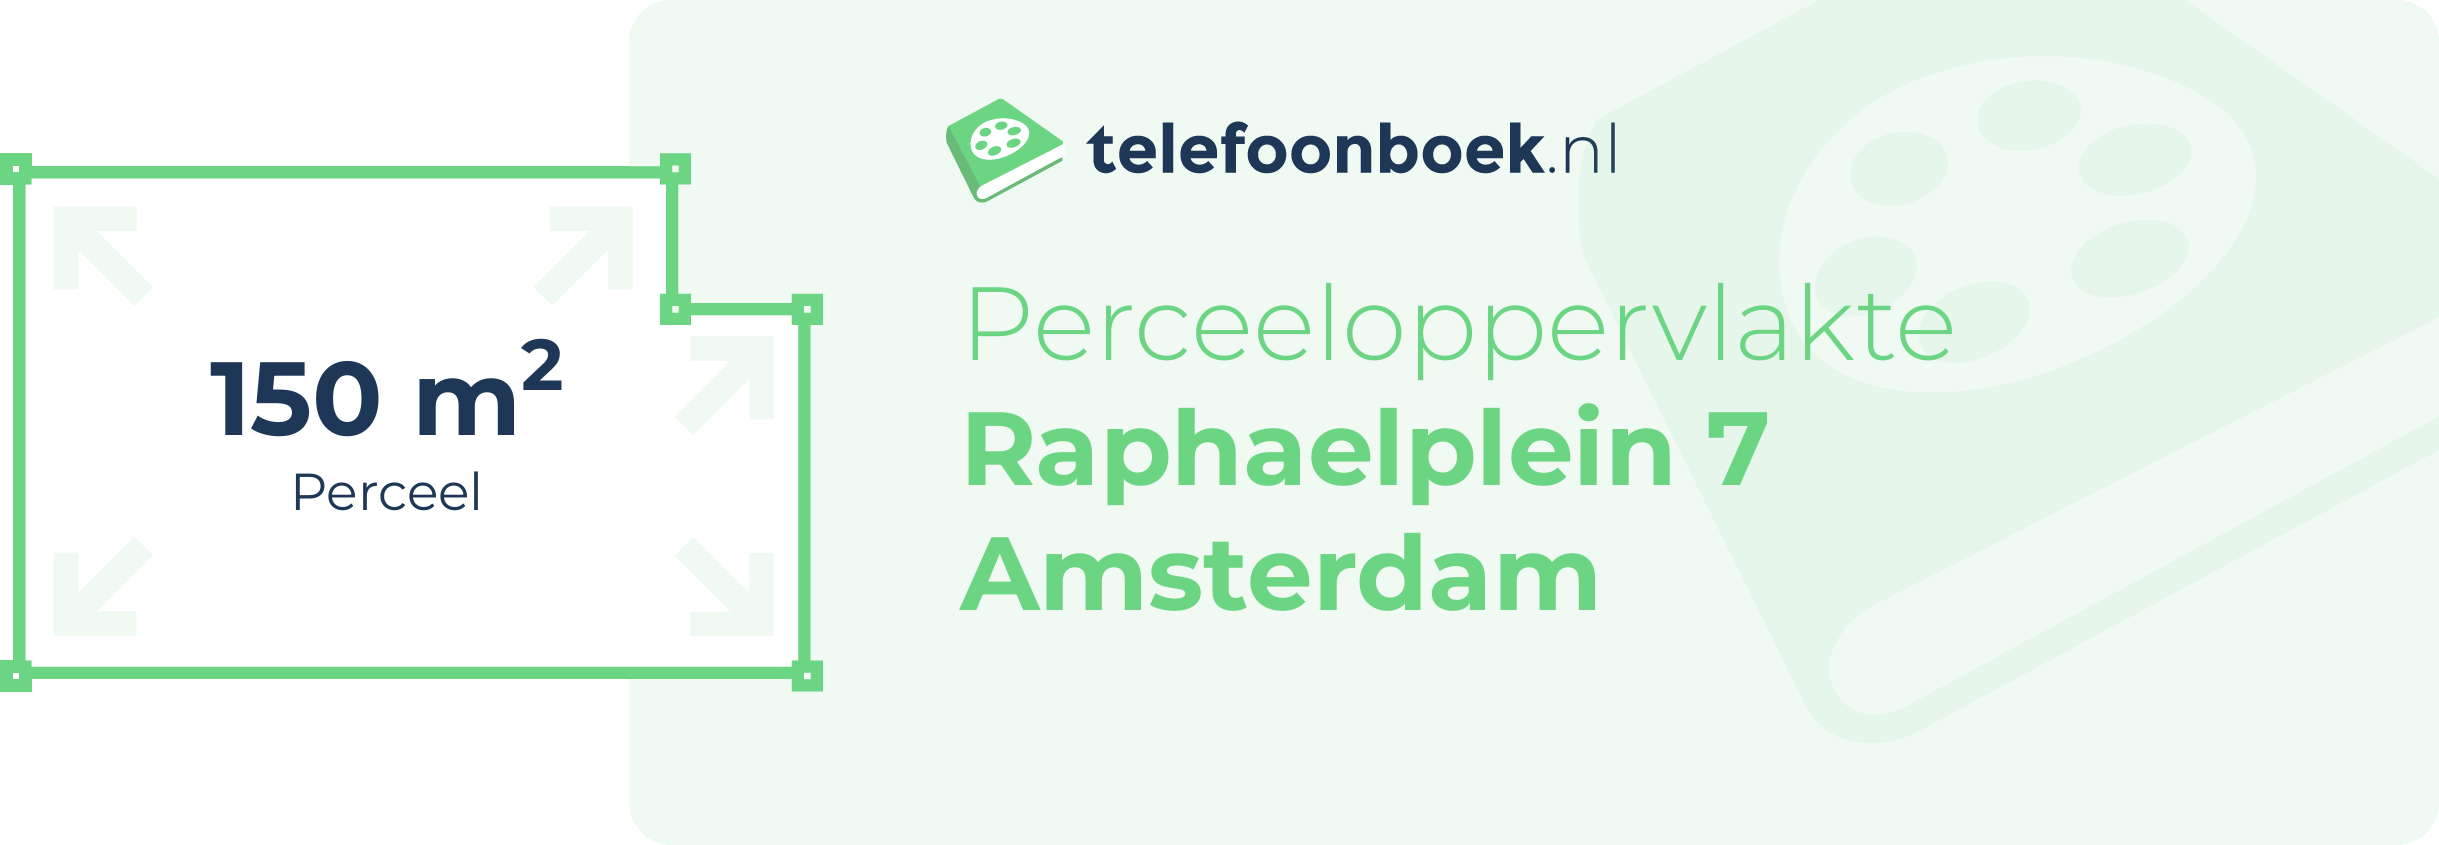 Perceeloppervlakte Raphaelplein 7 Amsterdam